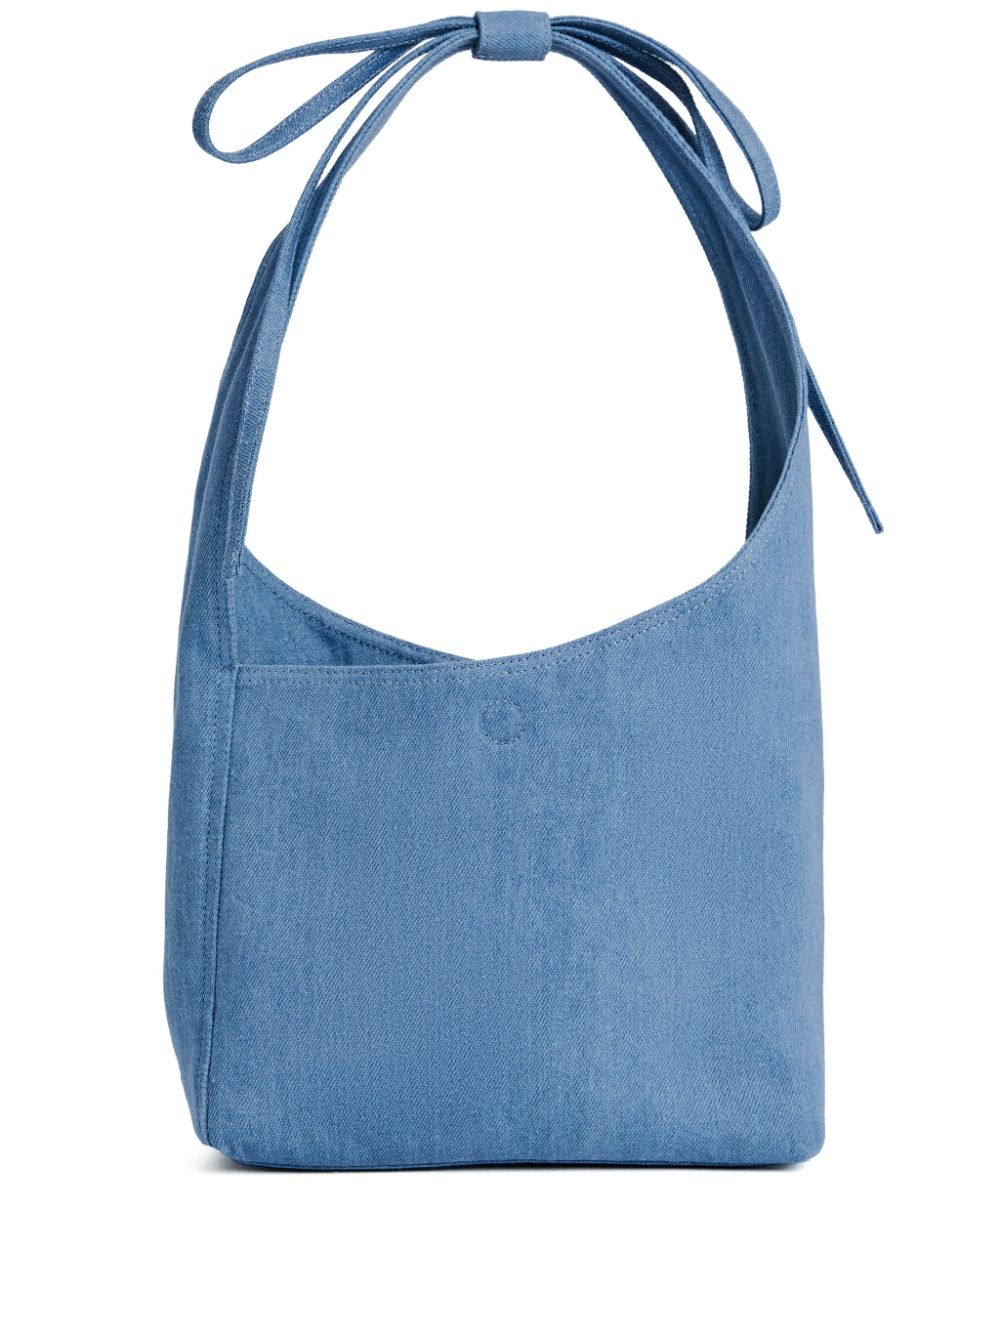 Reformation Small Vittoria Tote Bag In Blue